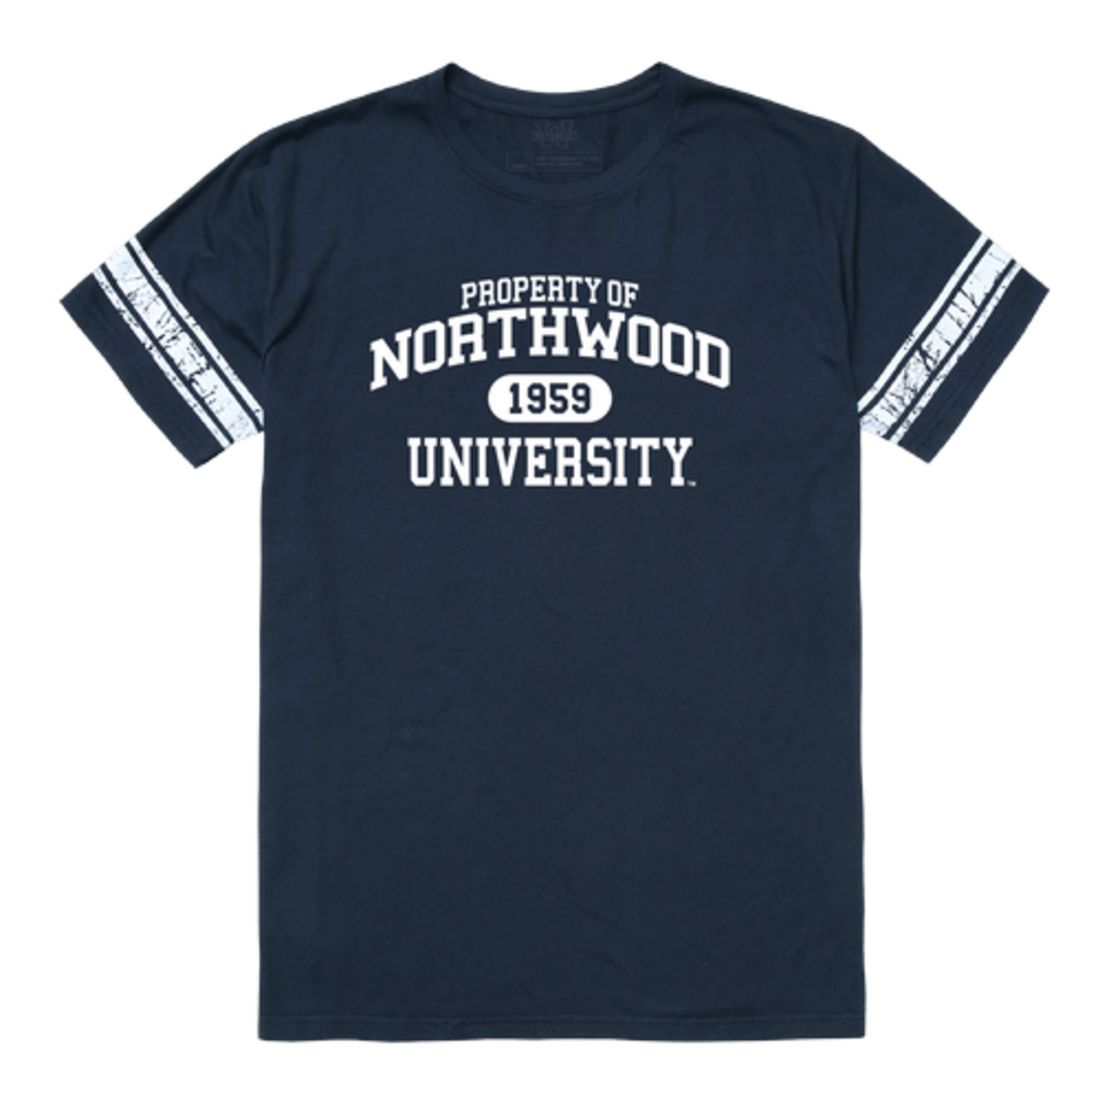 Northwood University Timberwolves Property Football T-Shirt Tee